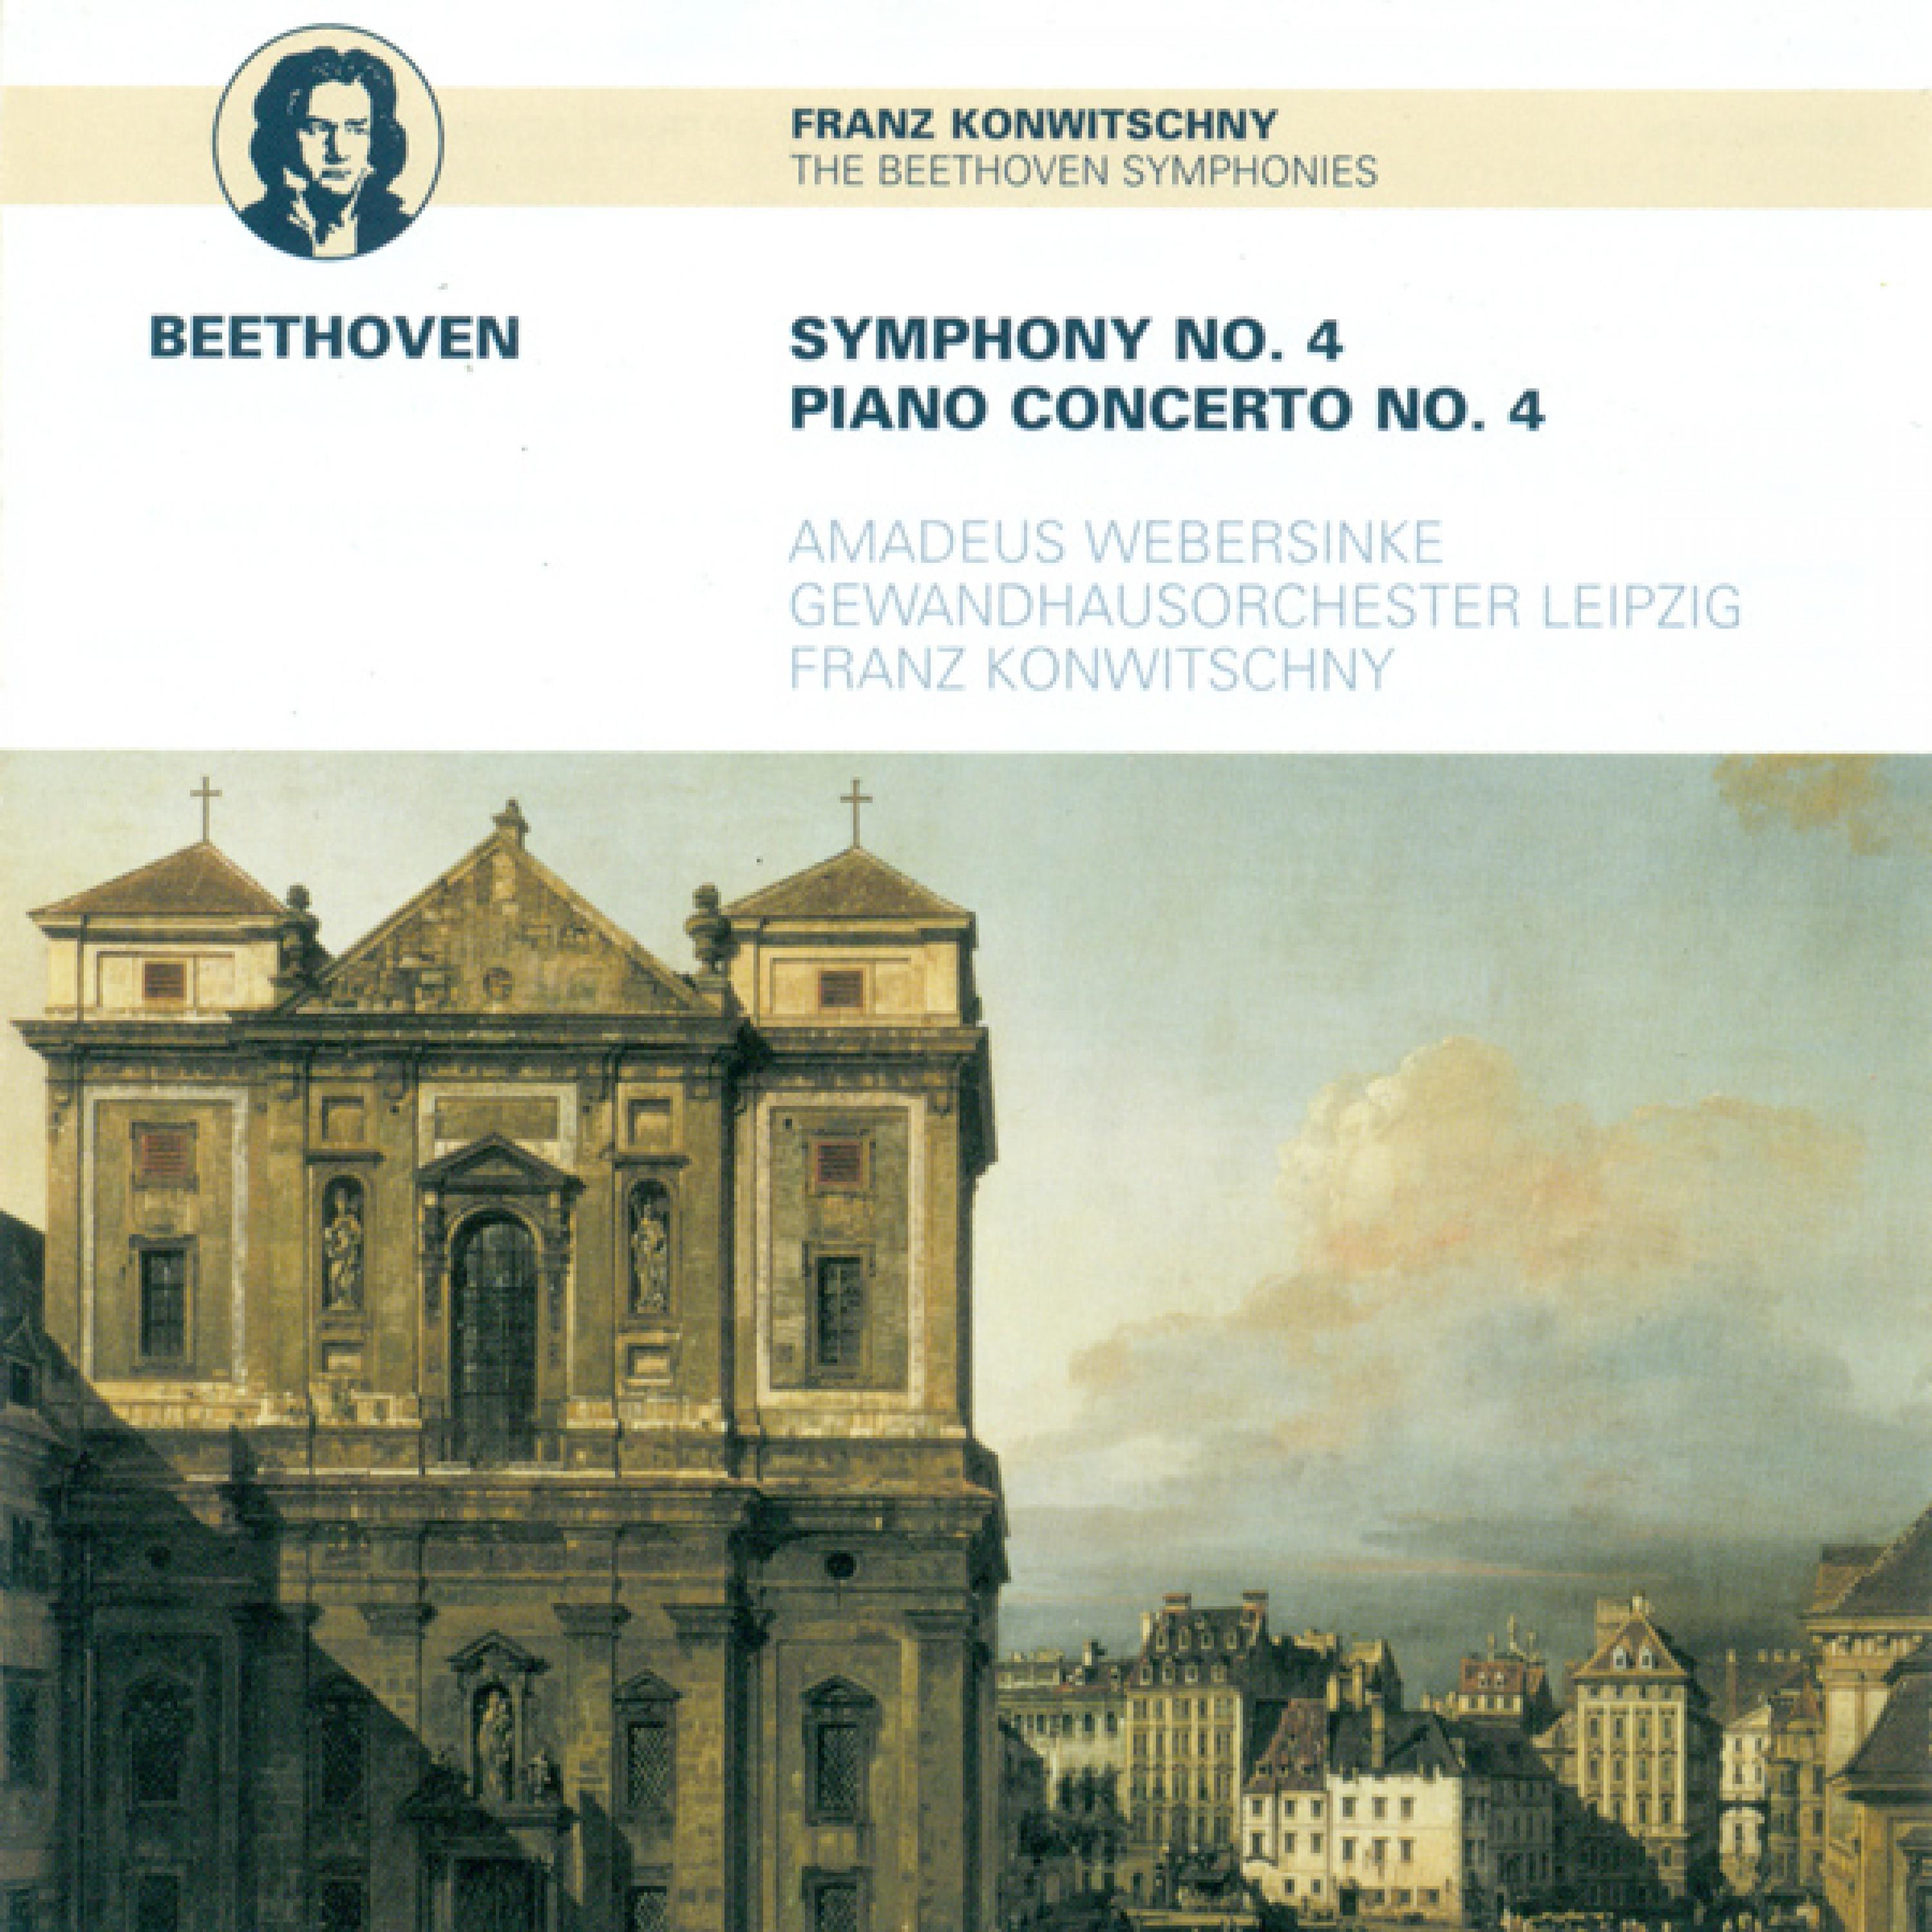 Symphony No. 4 in B-Flat Major, Op. 60: III. Menuetto - Allegro vivace